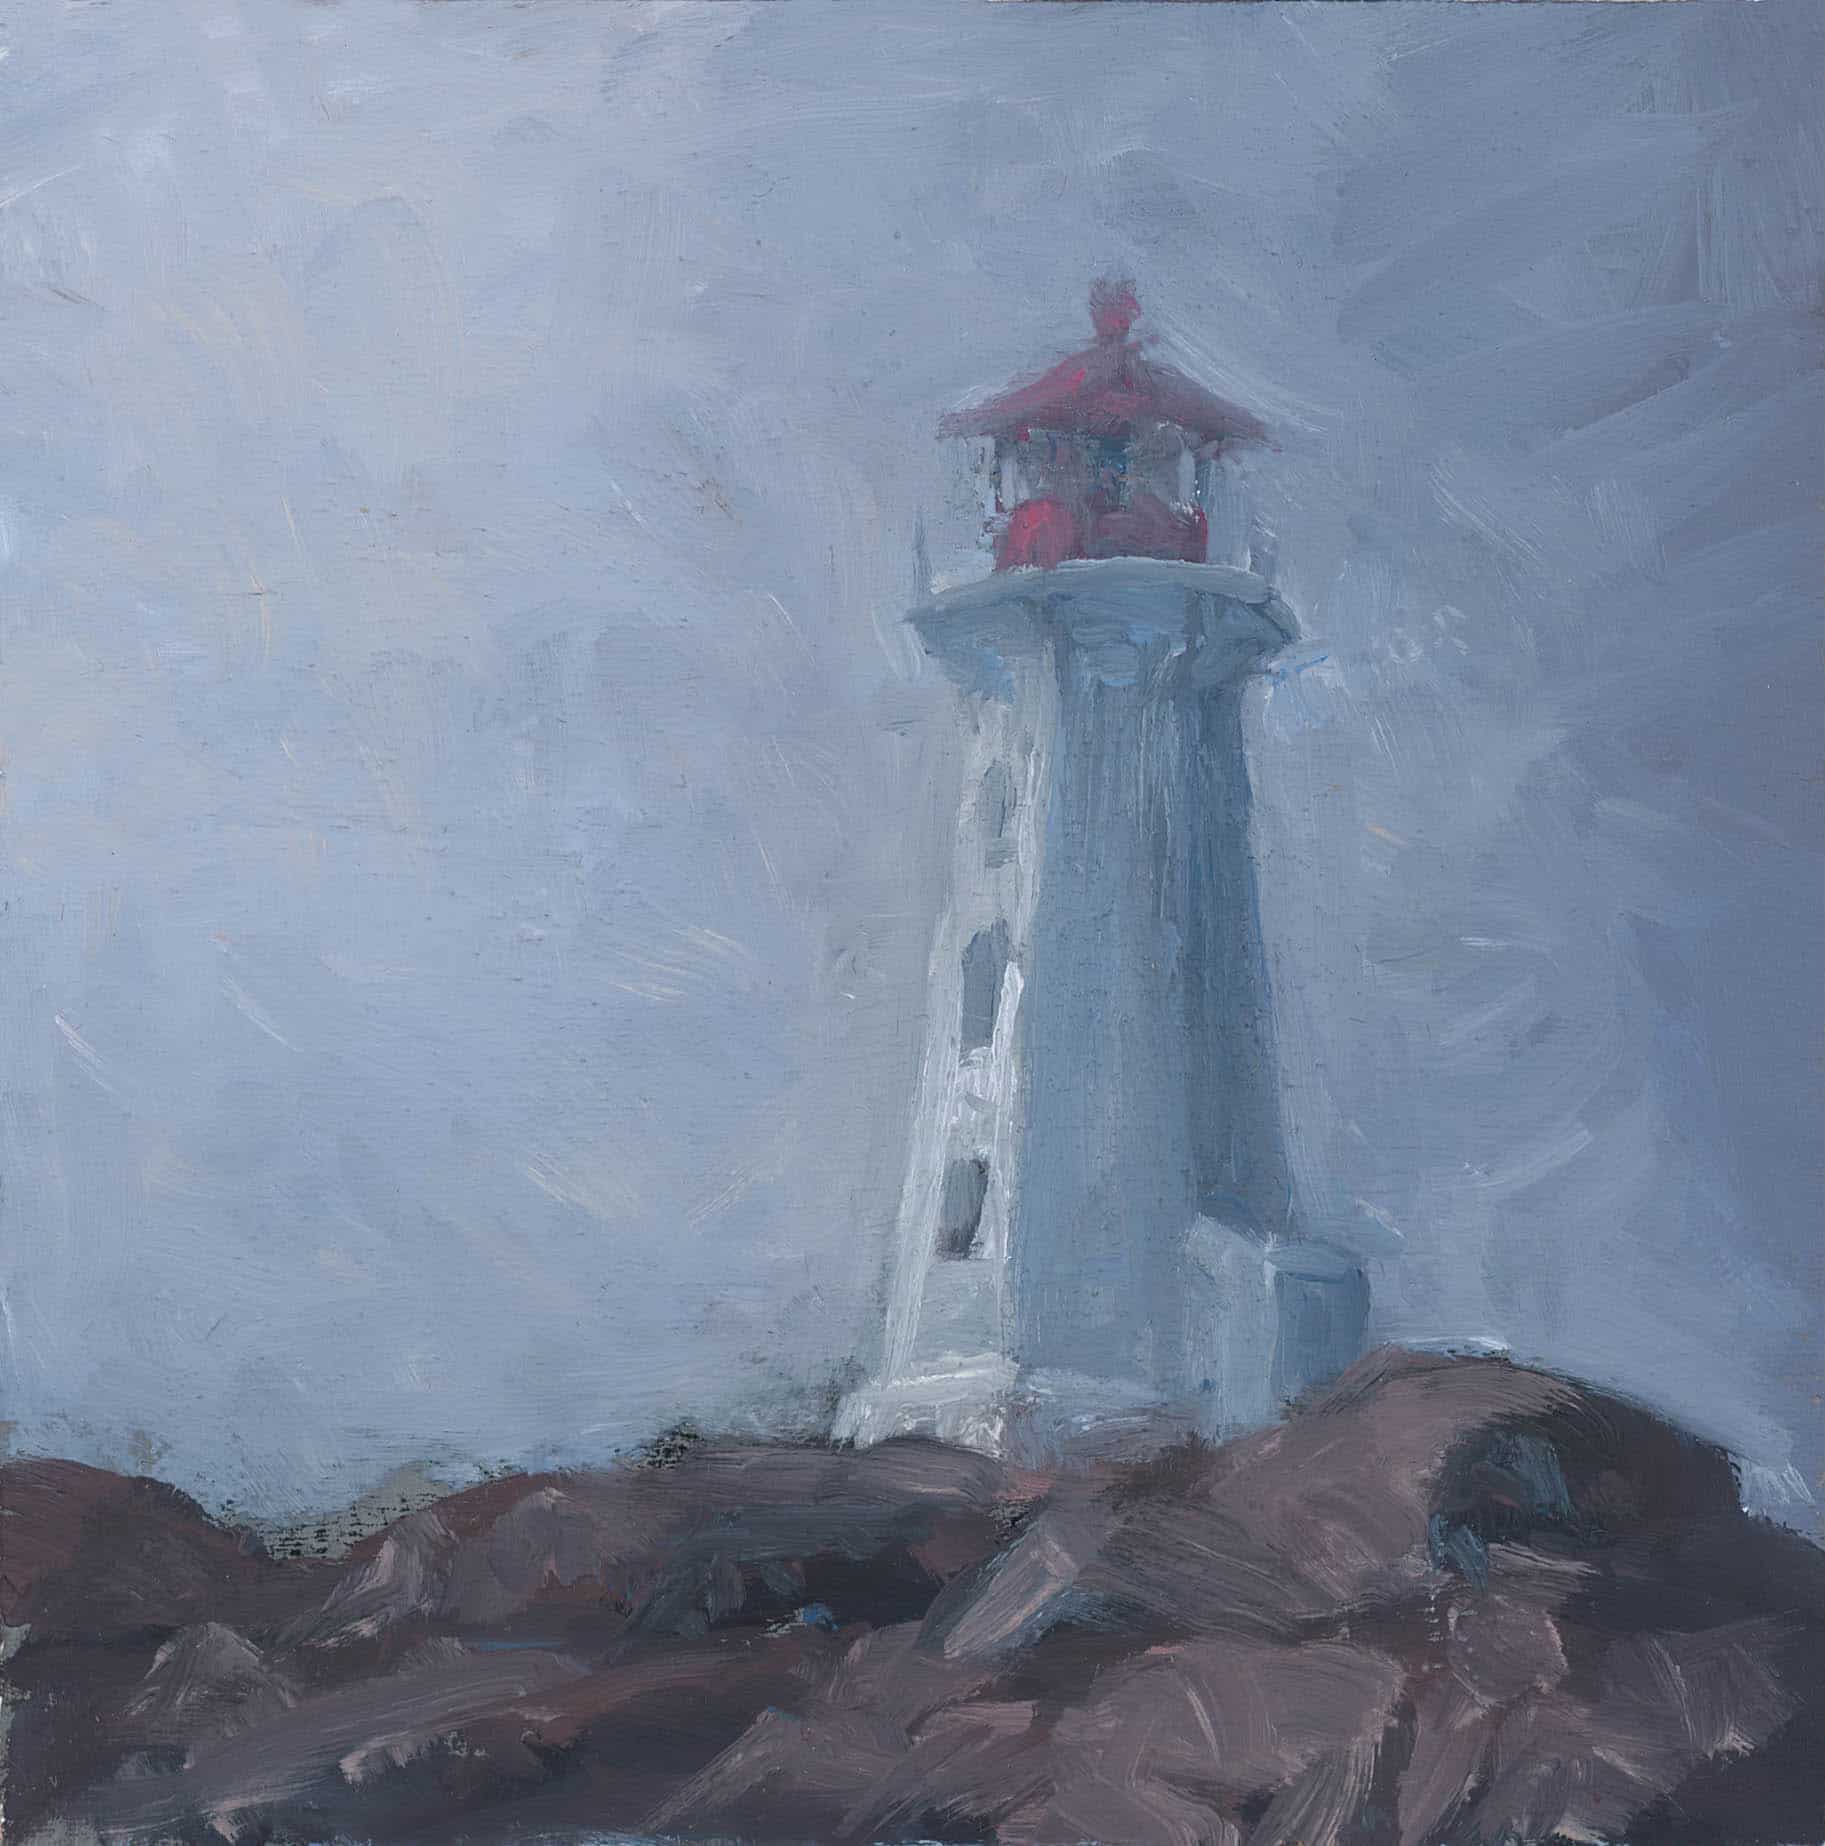 Lighthouse in breaking mist - oil on wood - Kim Aerts